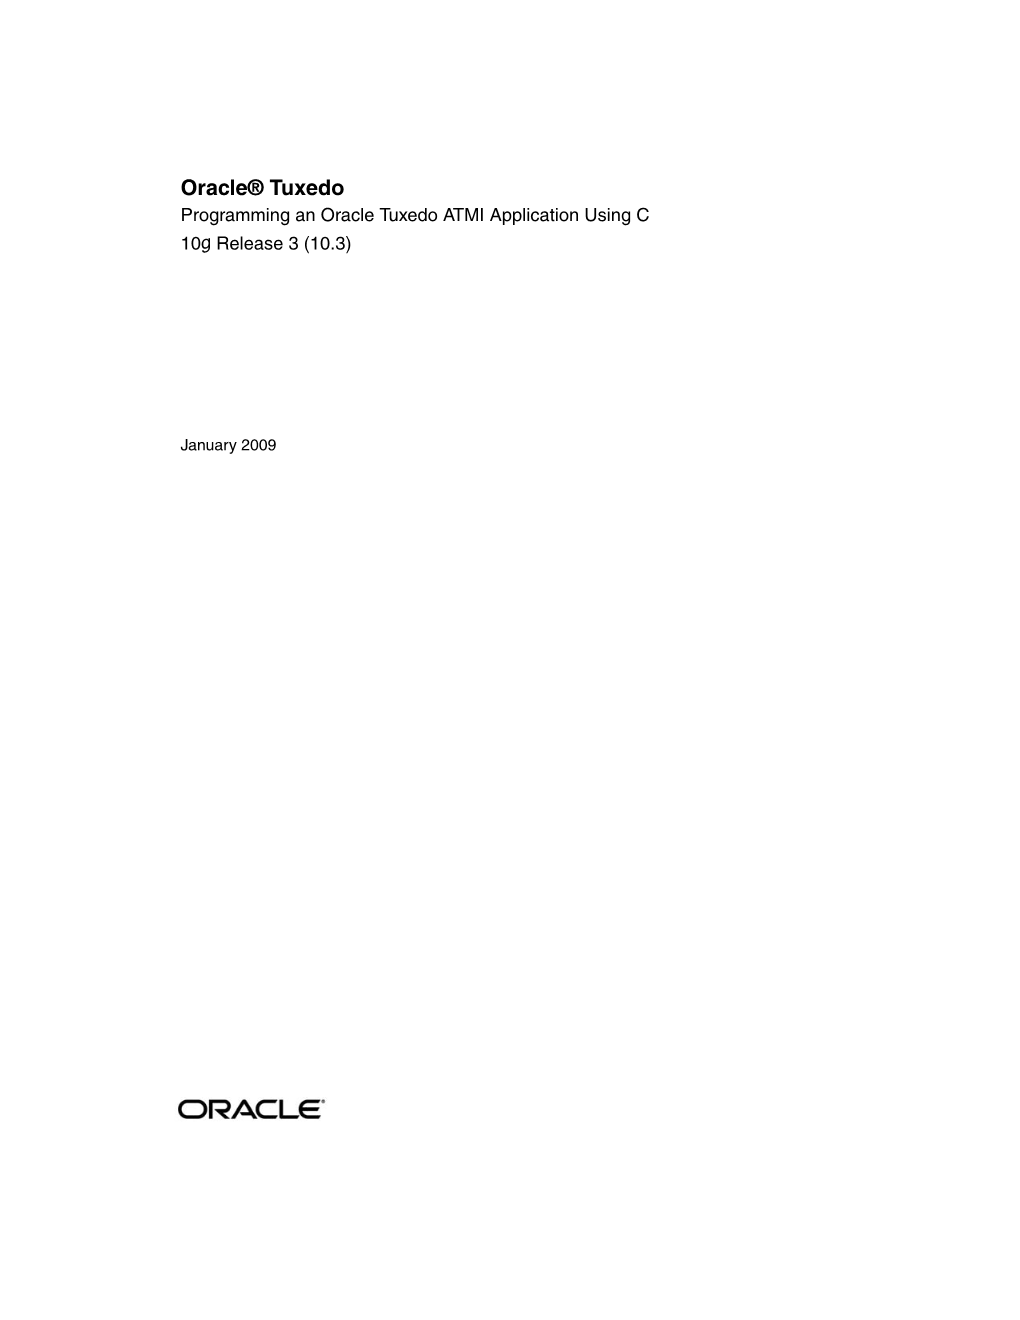 Oracle® Tuxedo Programming an Oracle Tuxedo ATMI Application Using C 10G Release 3 (10.3)